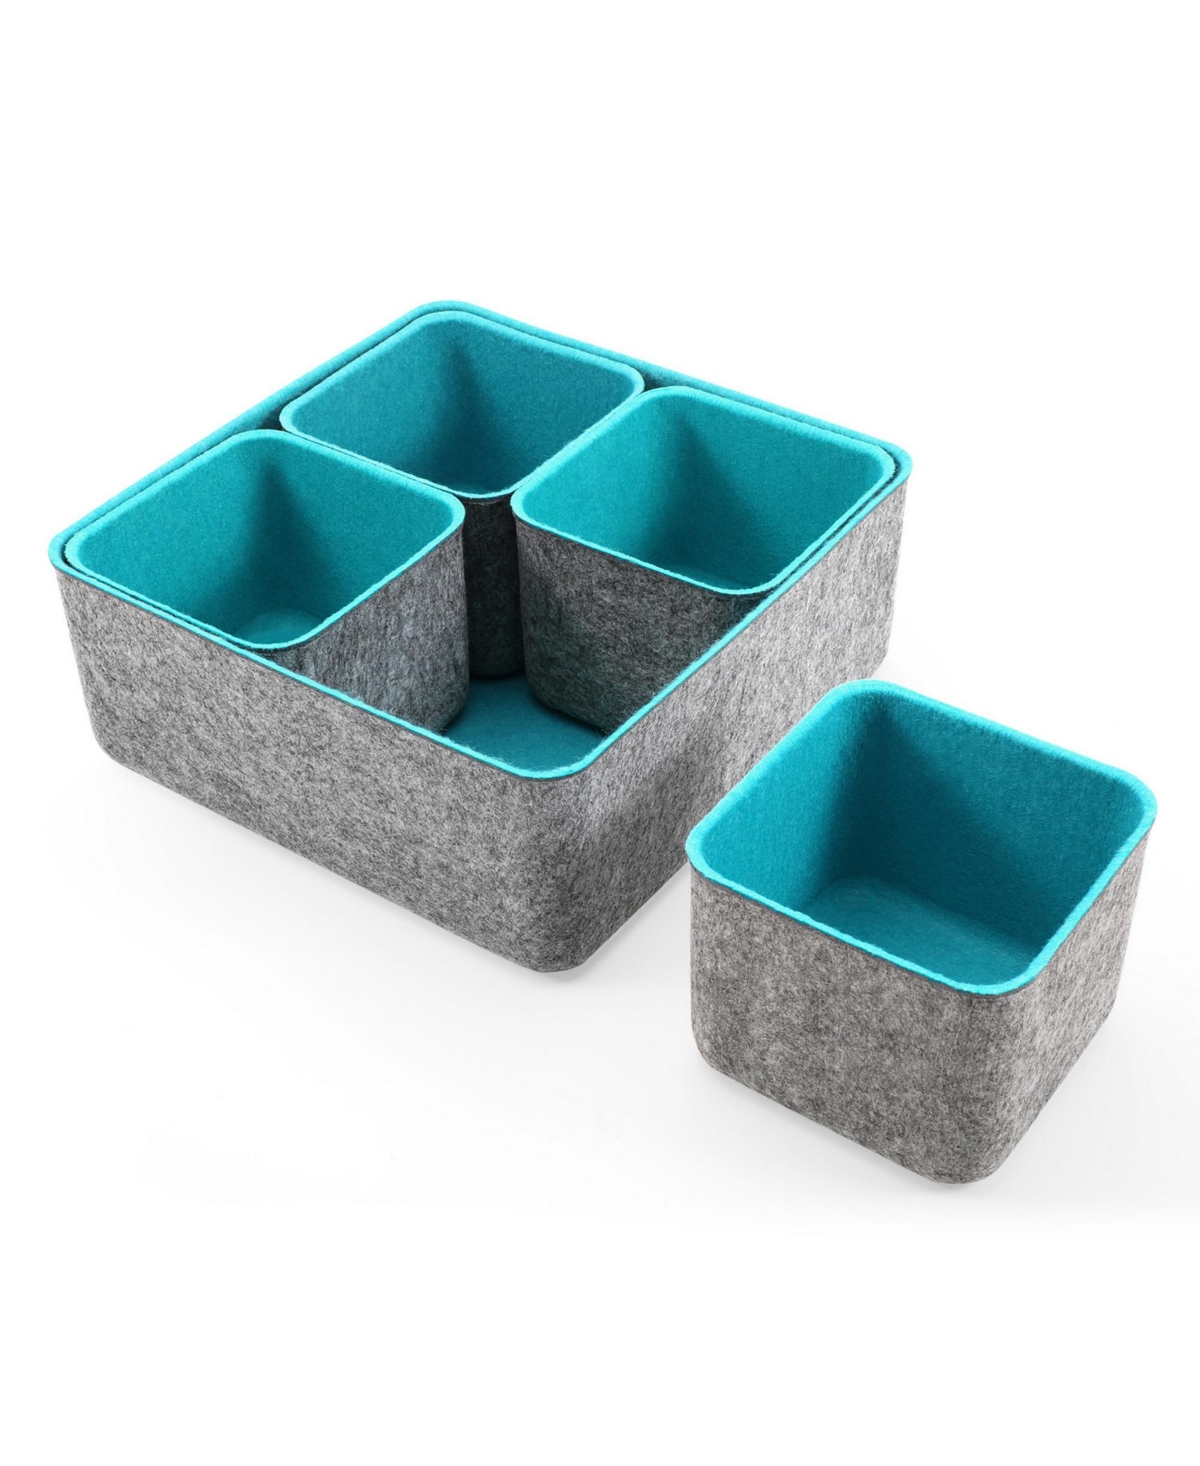 Welaxy 5 Piece Square Felt Storage Bin Set In Turquoise